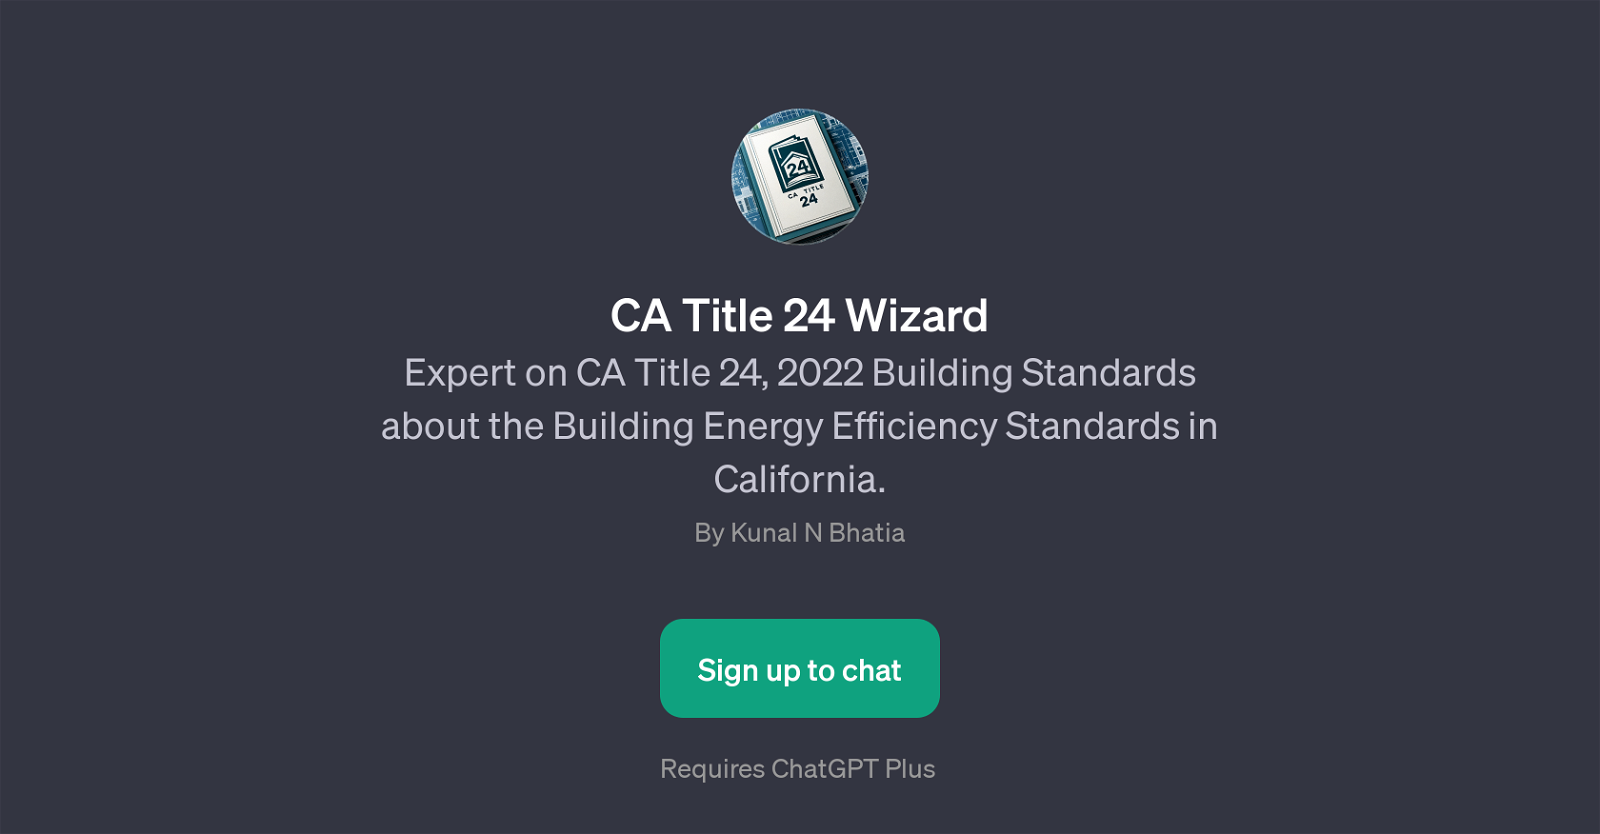 CA Title 24 Wizard website